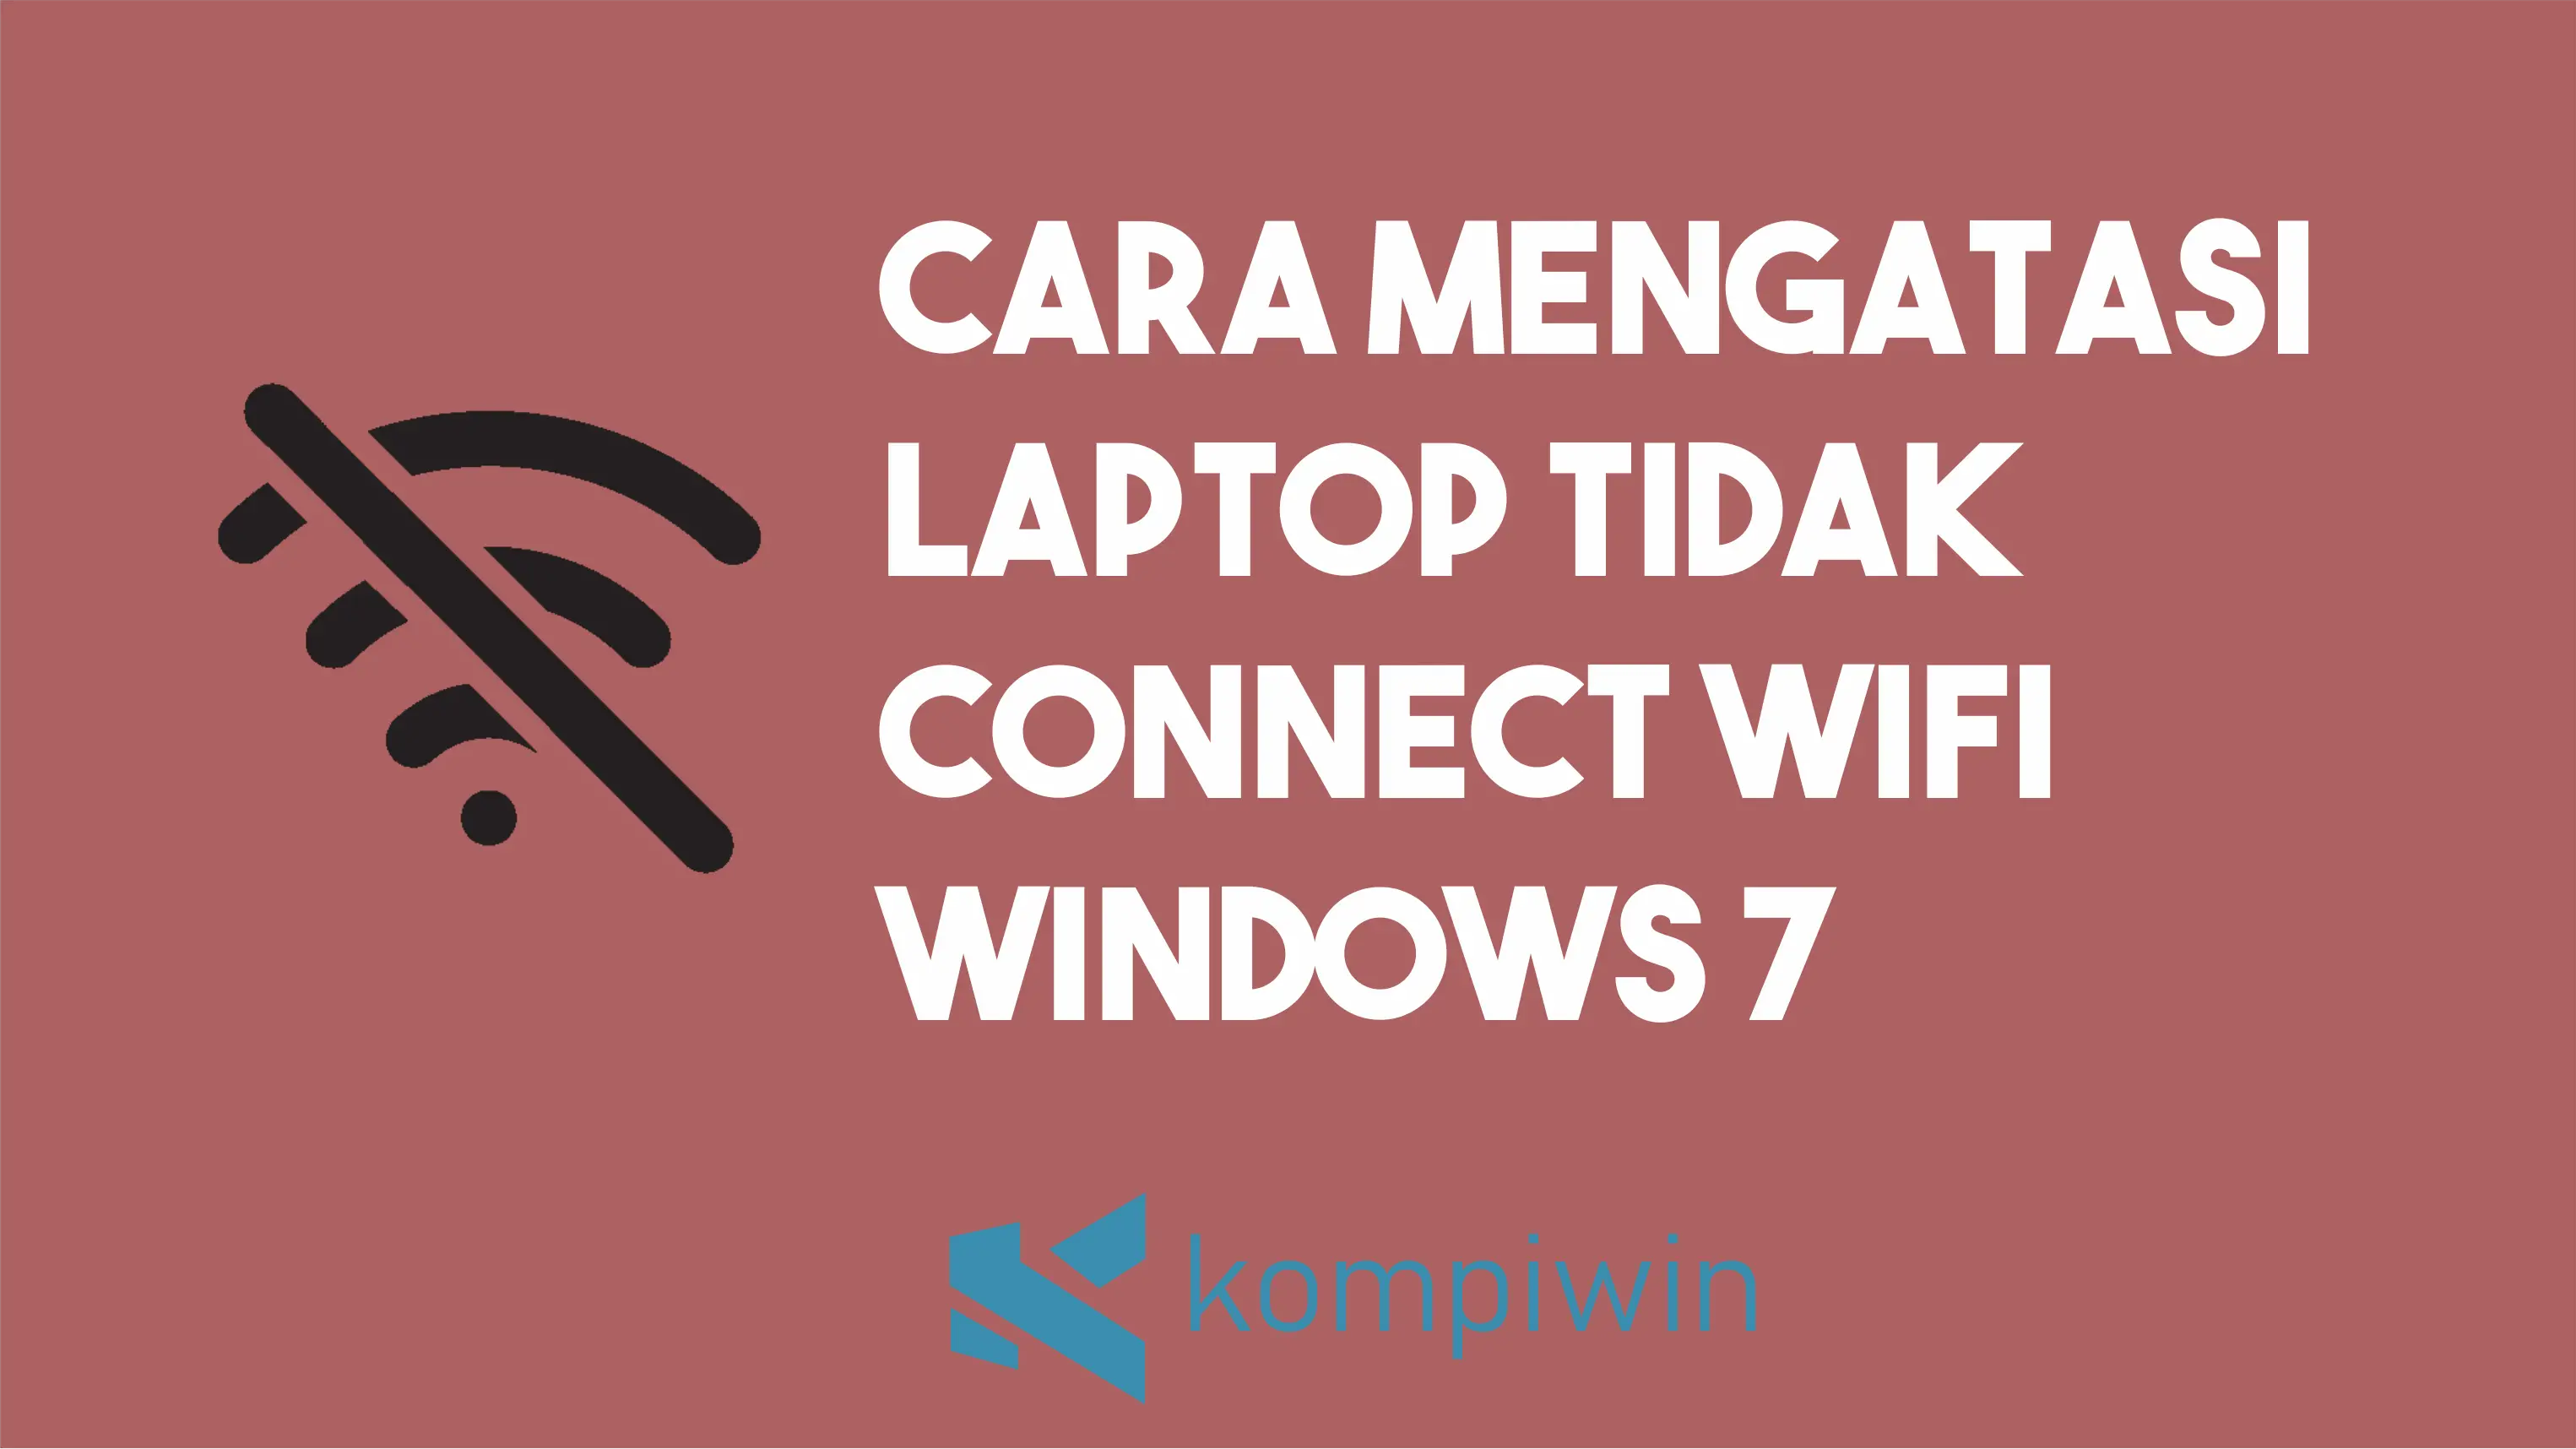 Cara Mengatasi Laptop Tidak Connect Wifi Windows 7